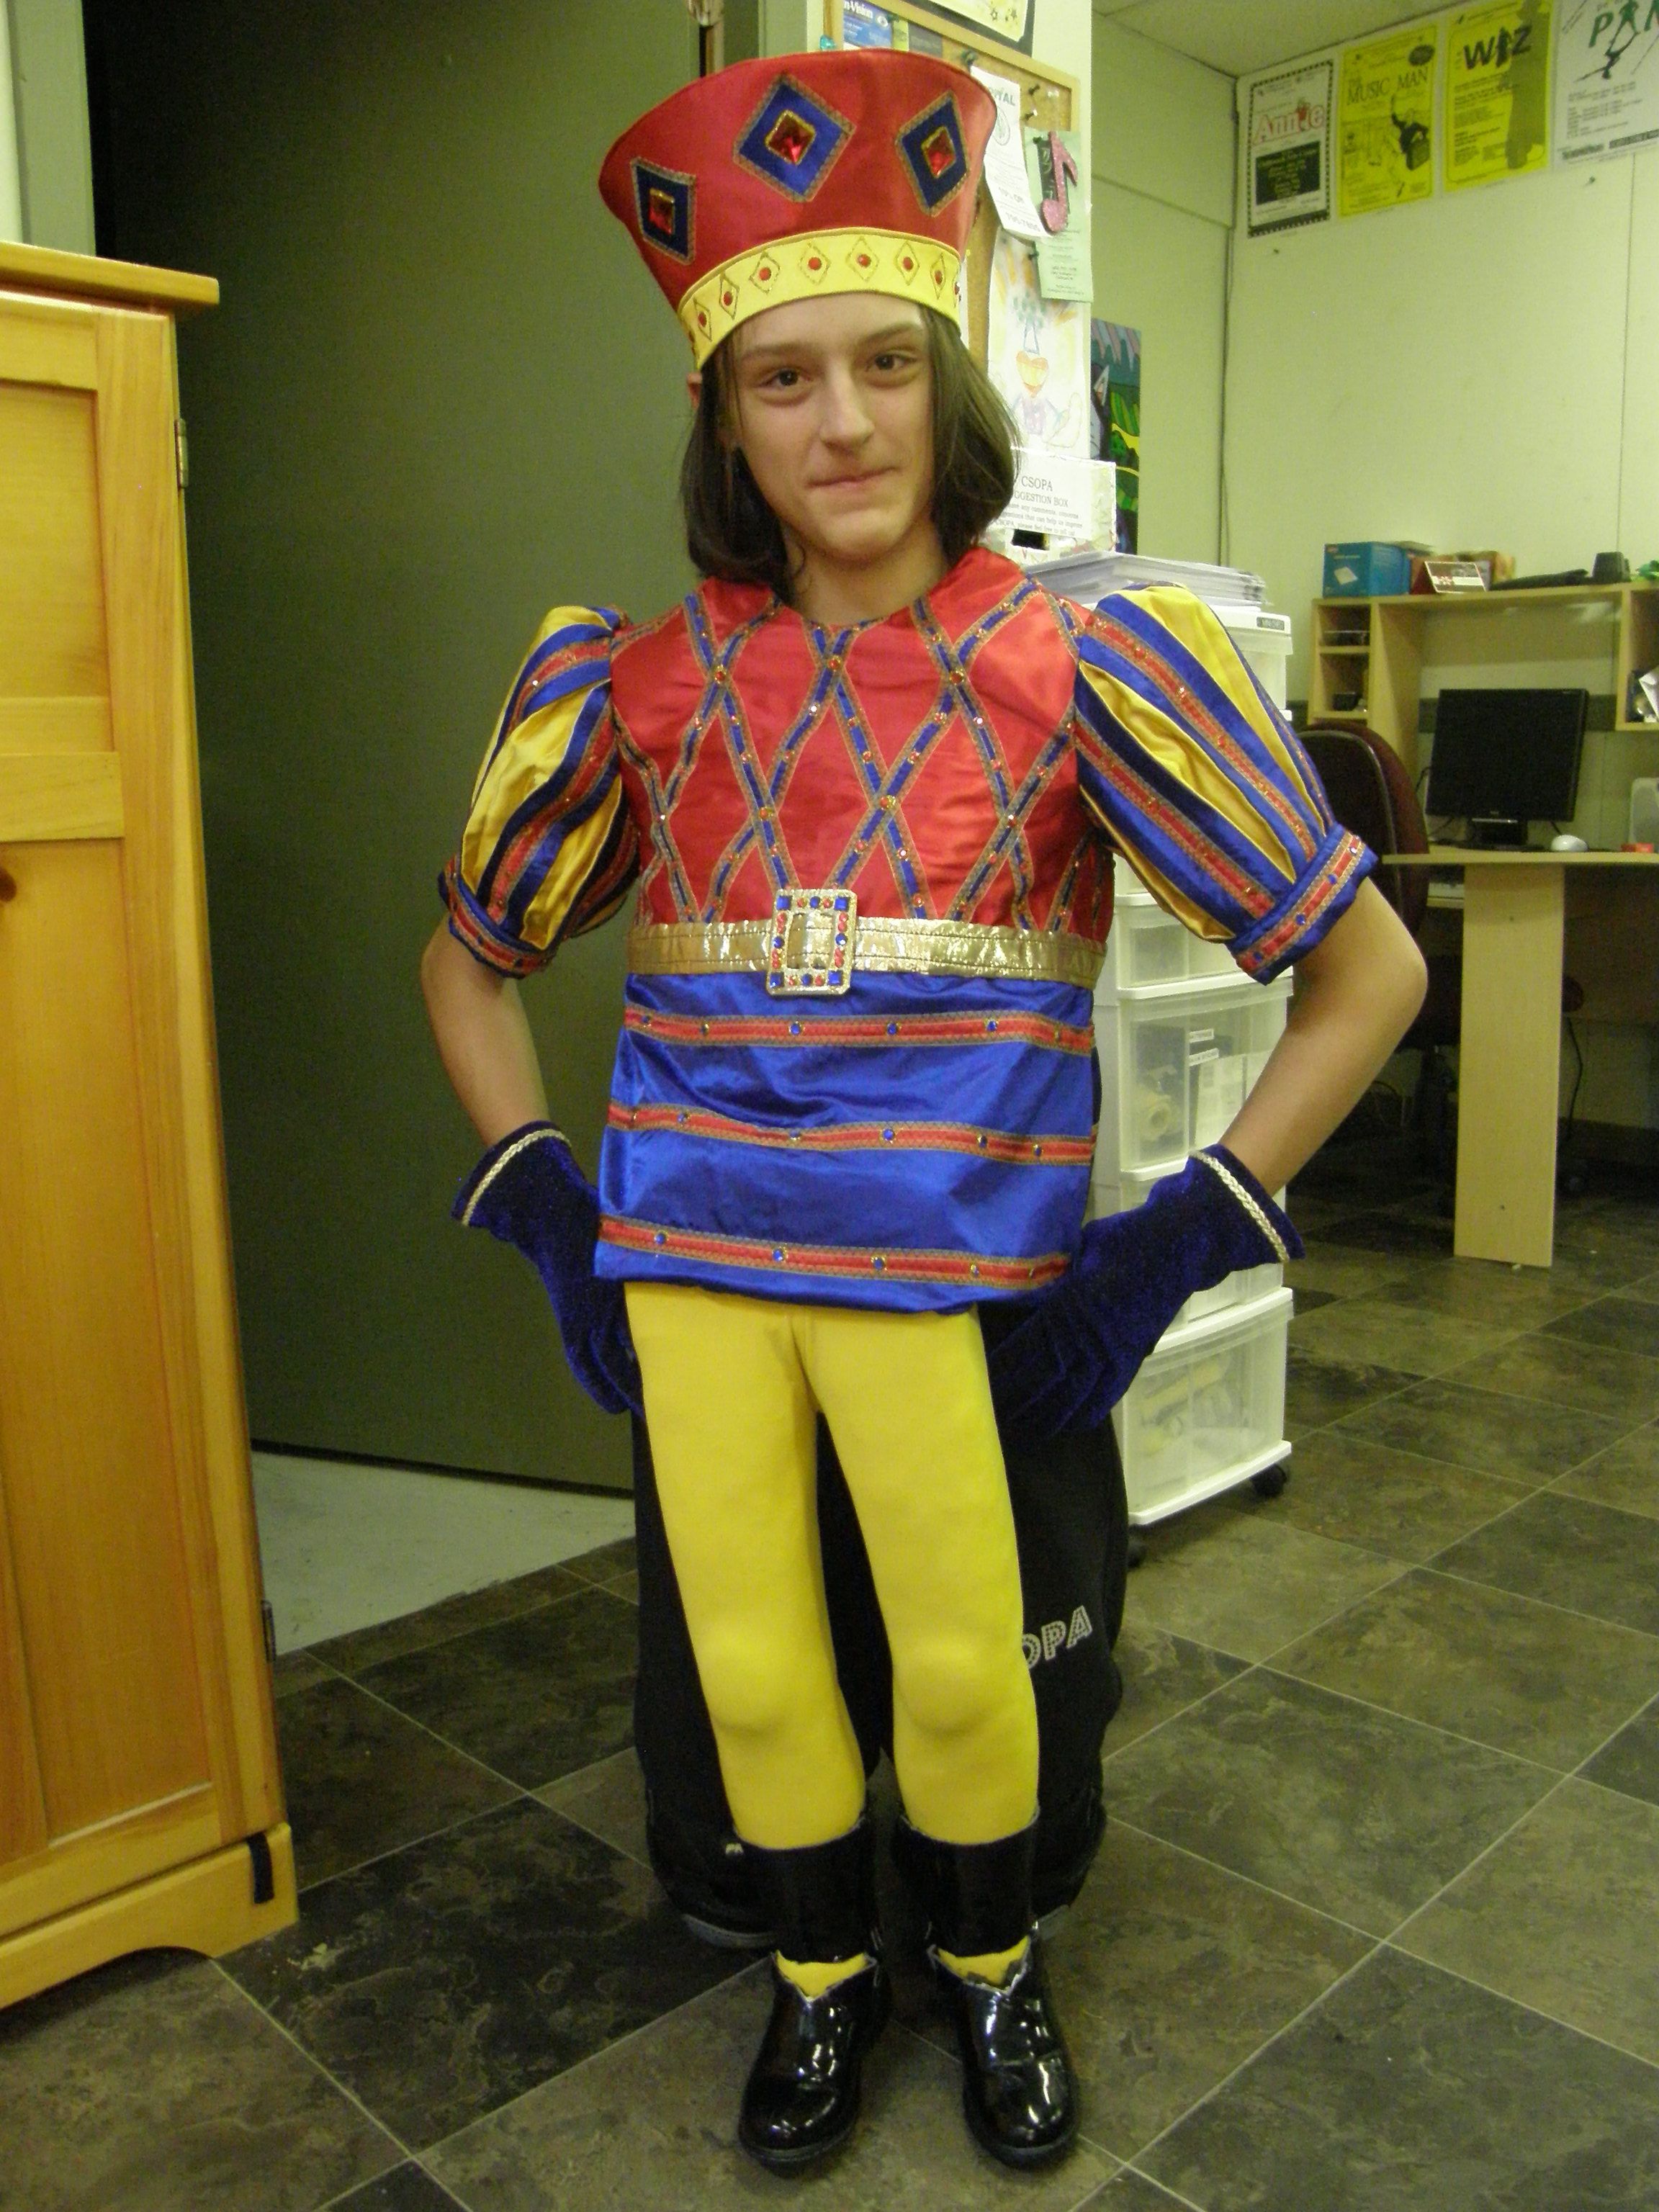 Lord Farquaad Costume